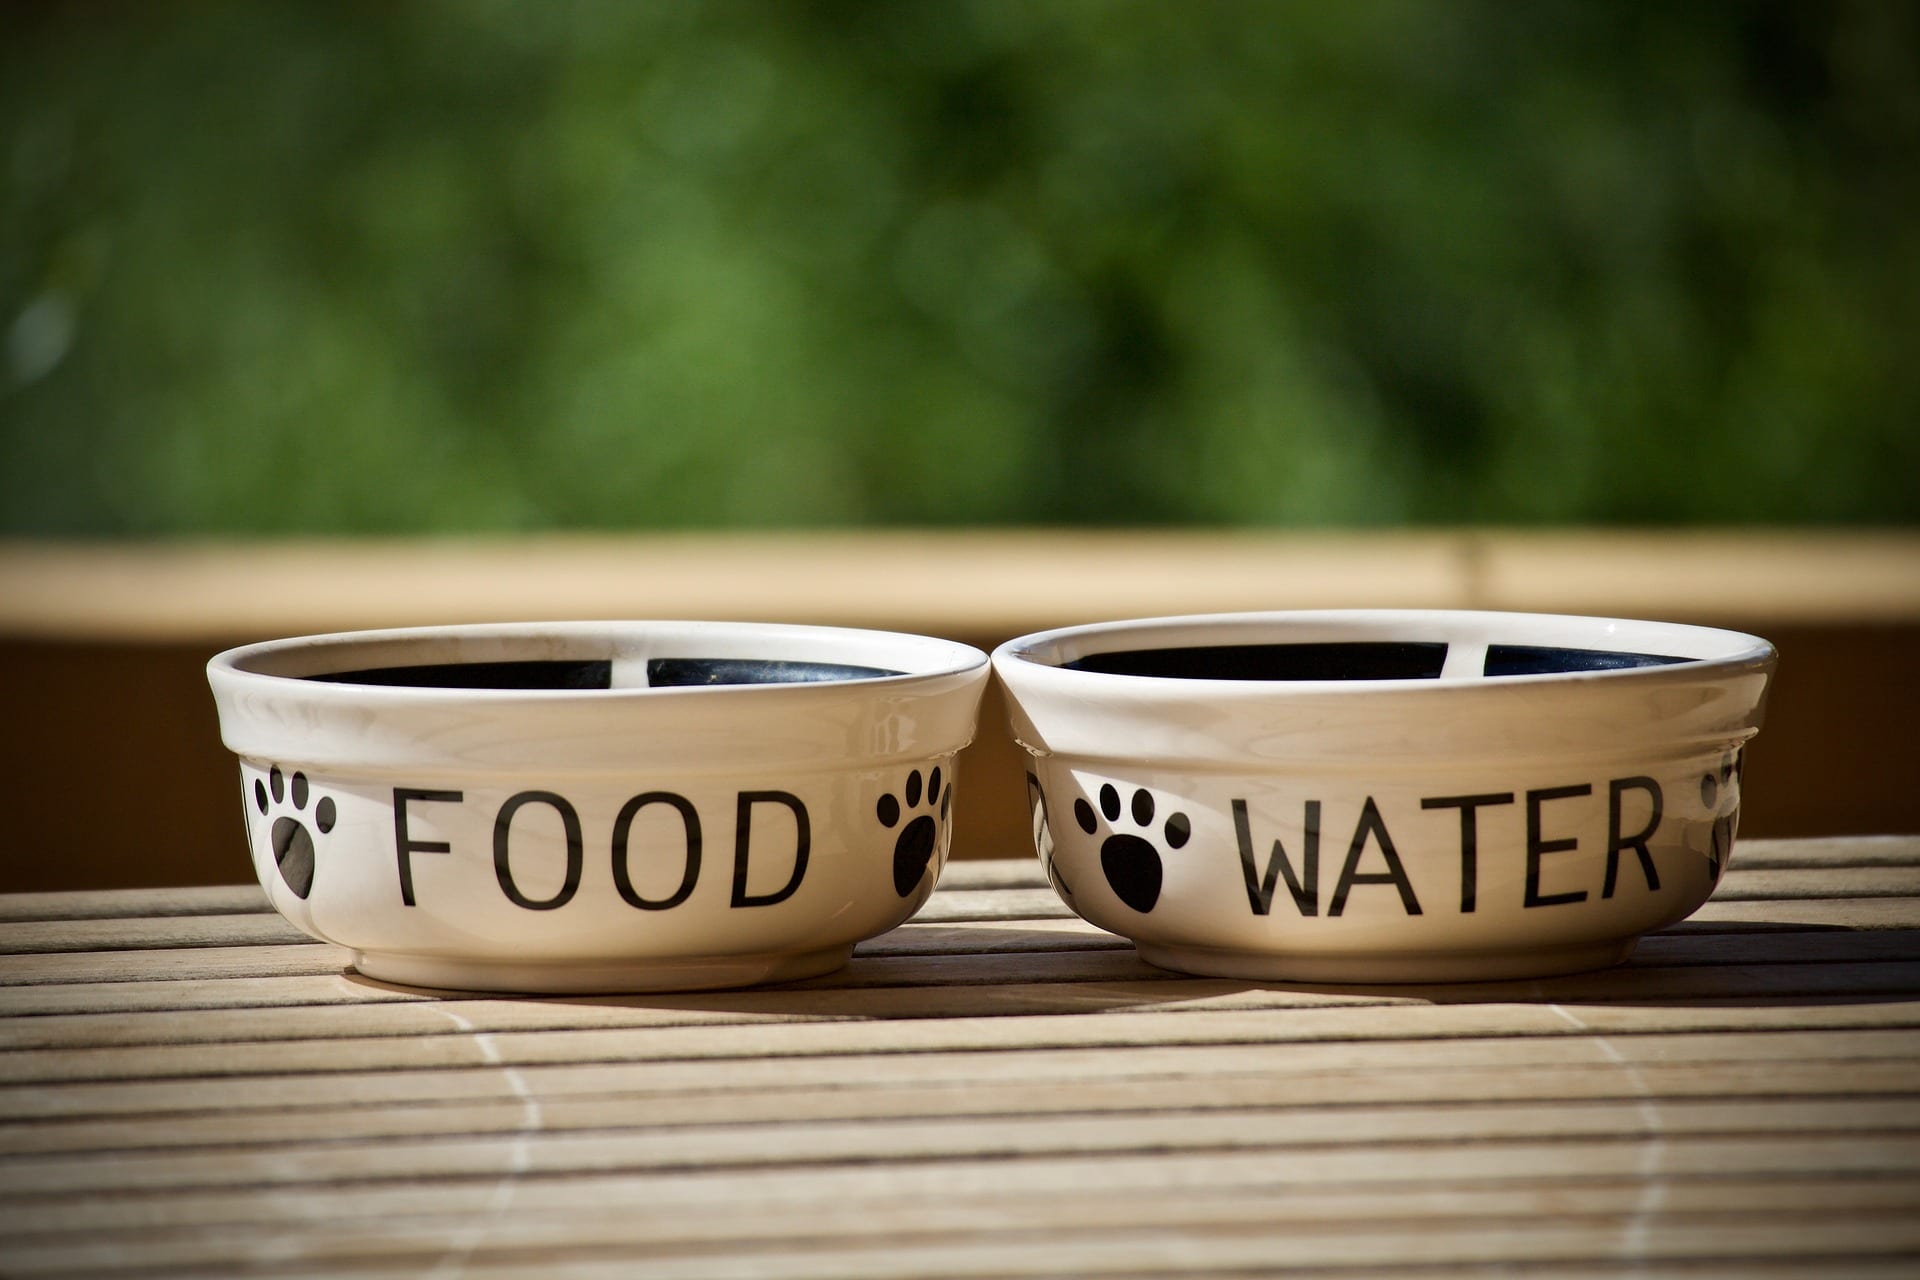 Take water and dog treats